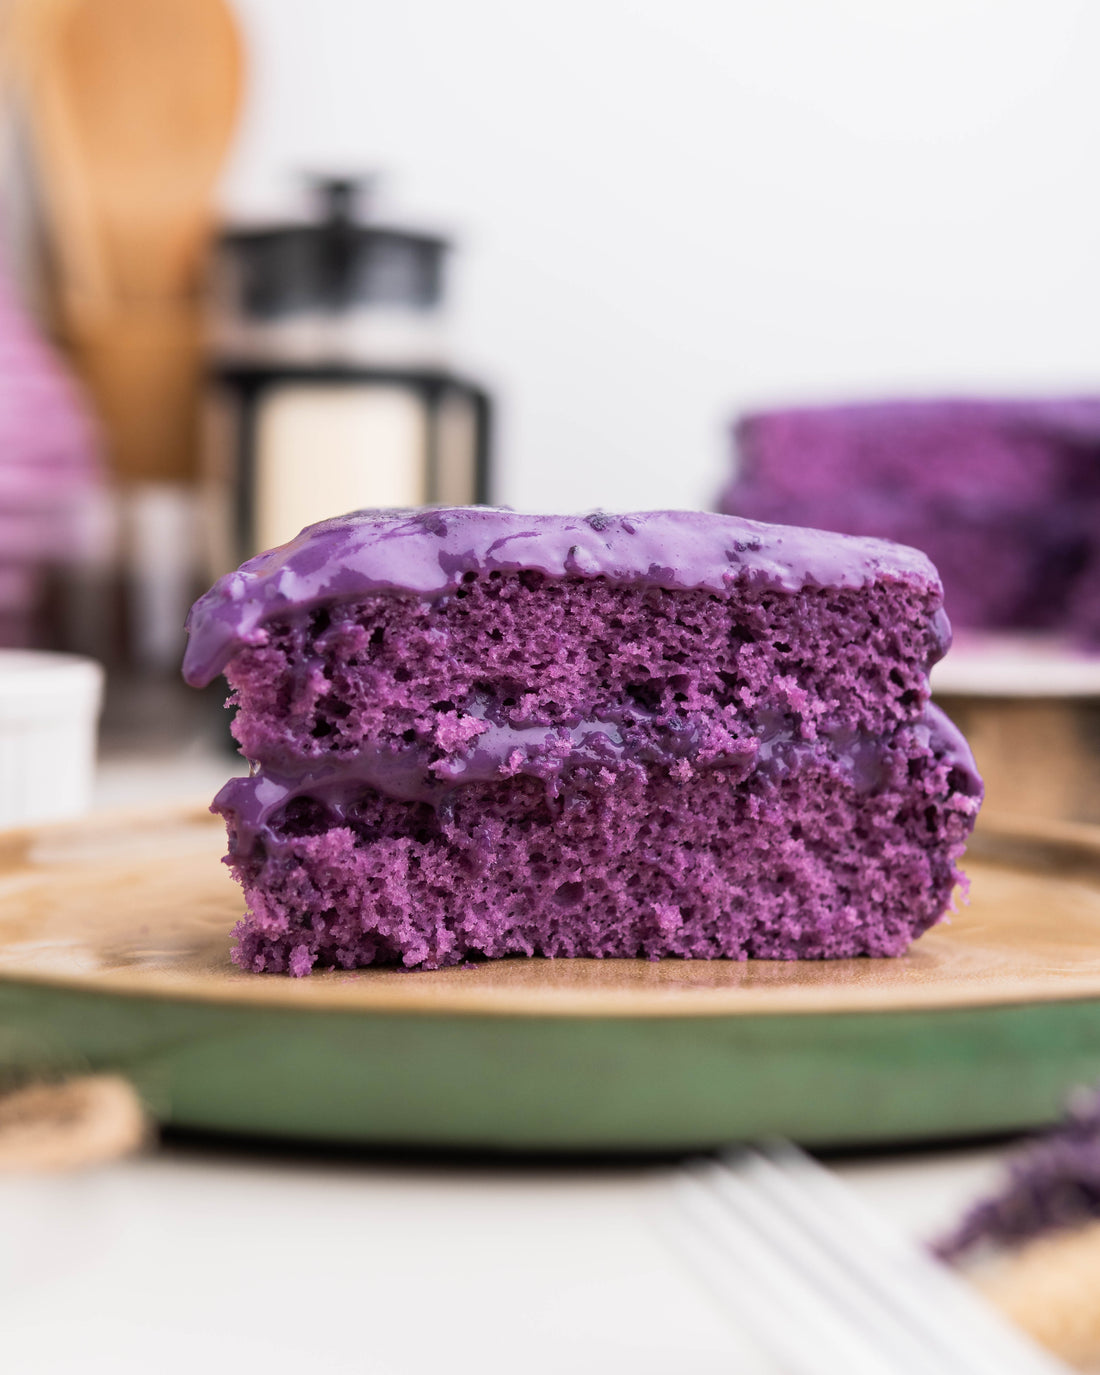 History of Purple Yam Cakes